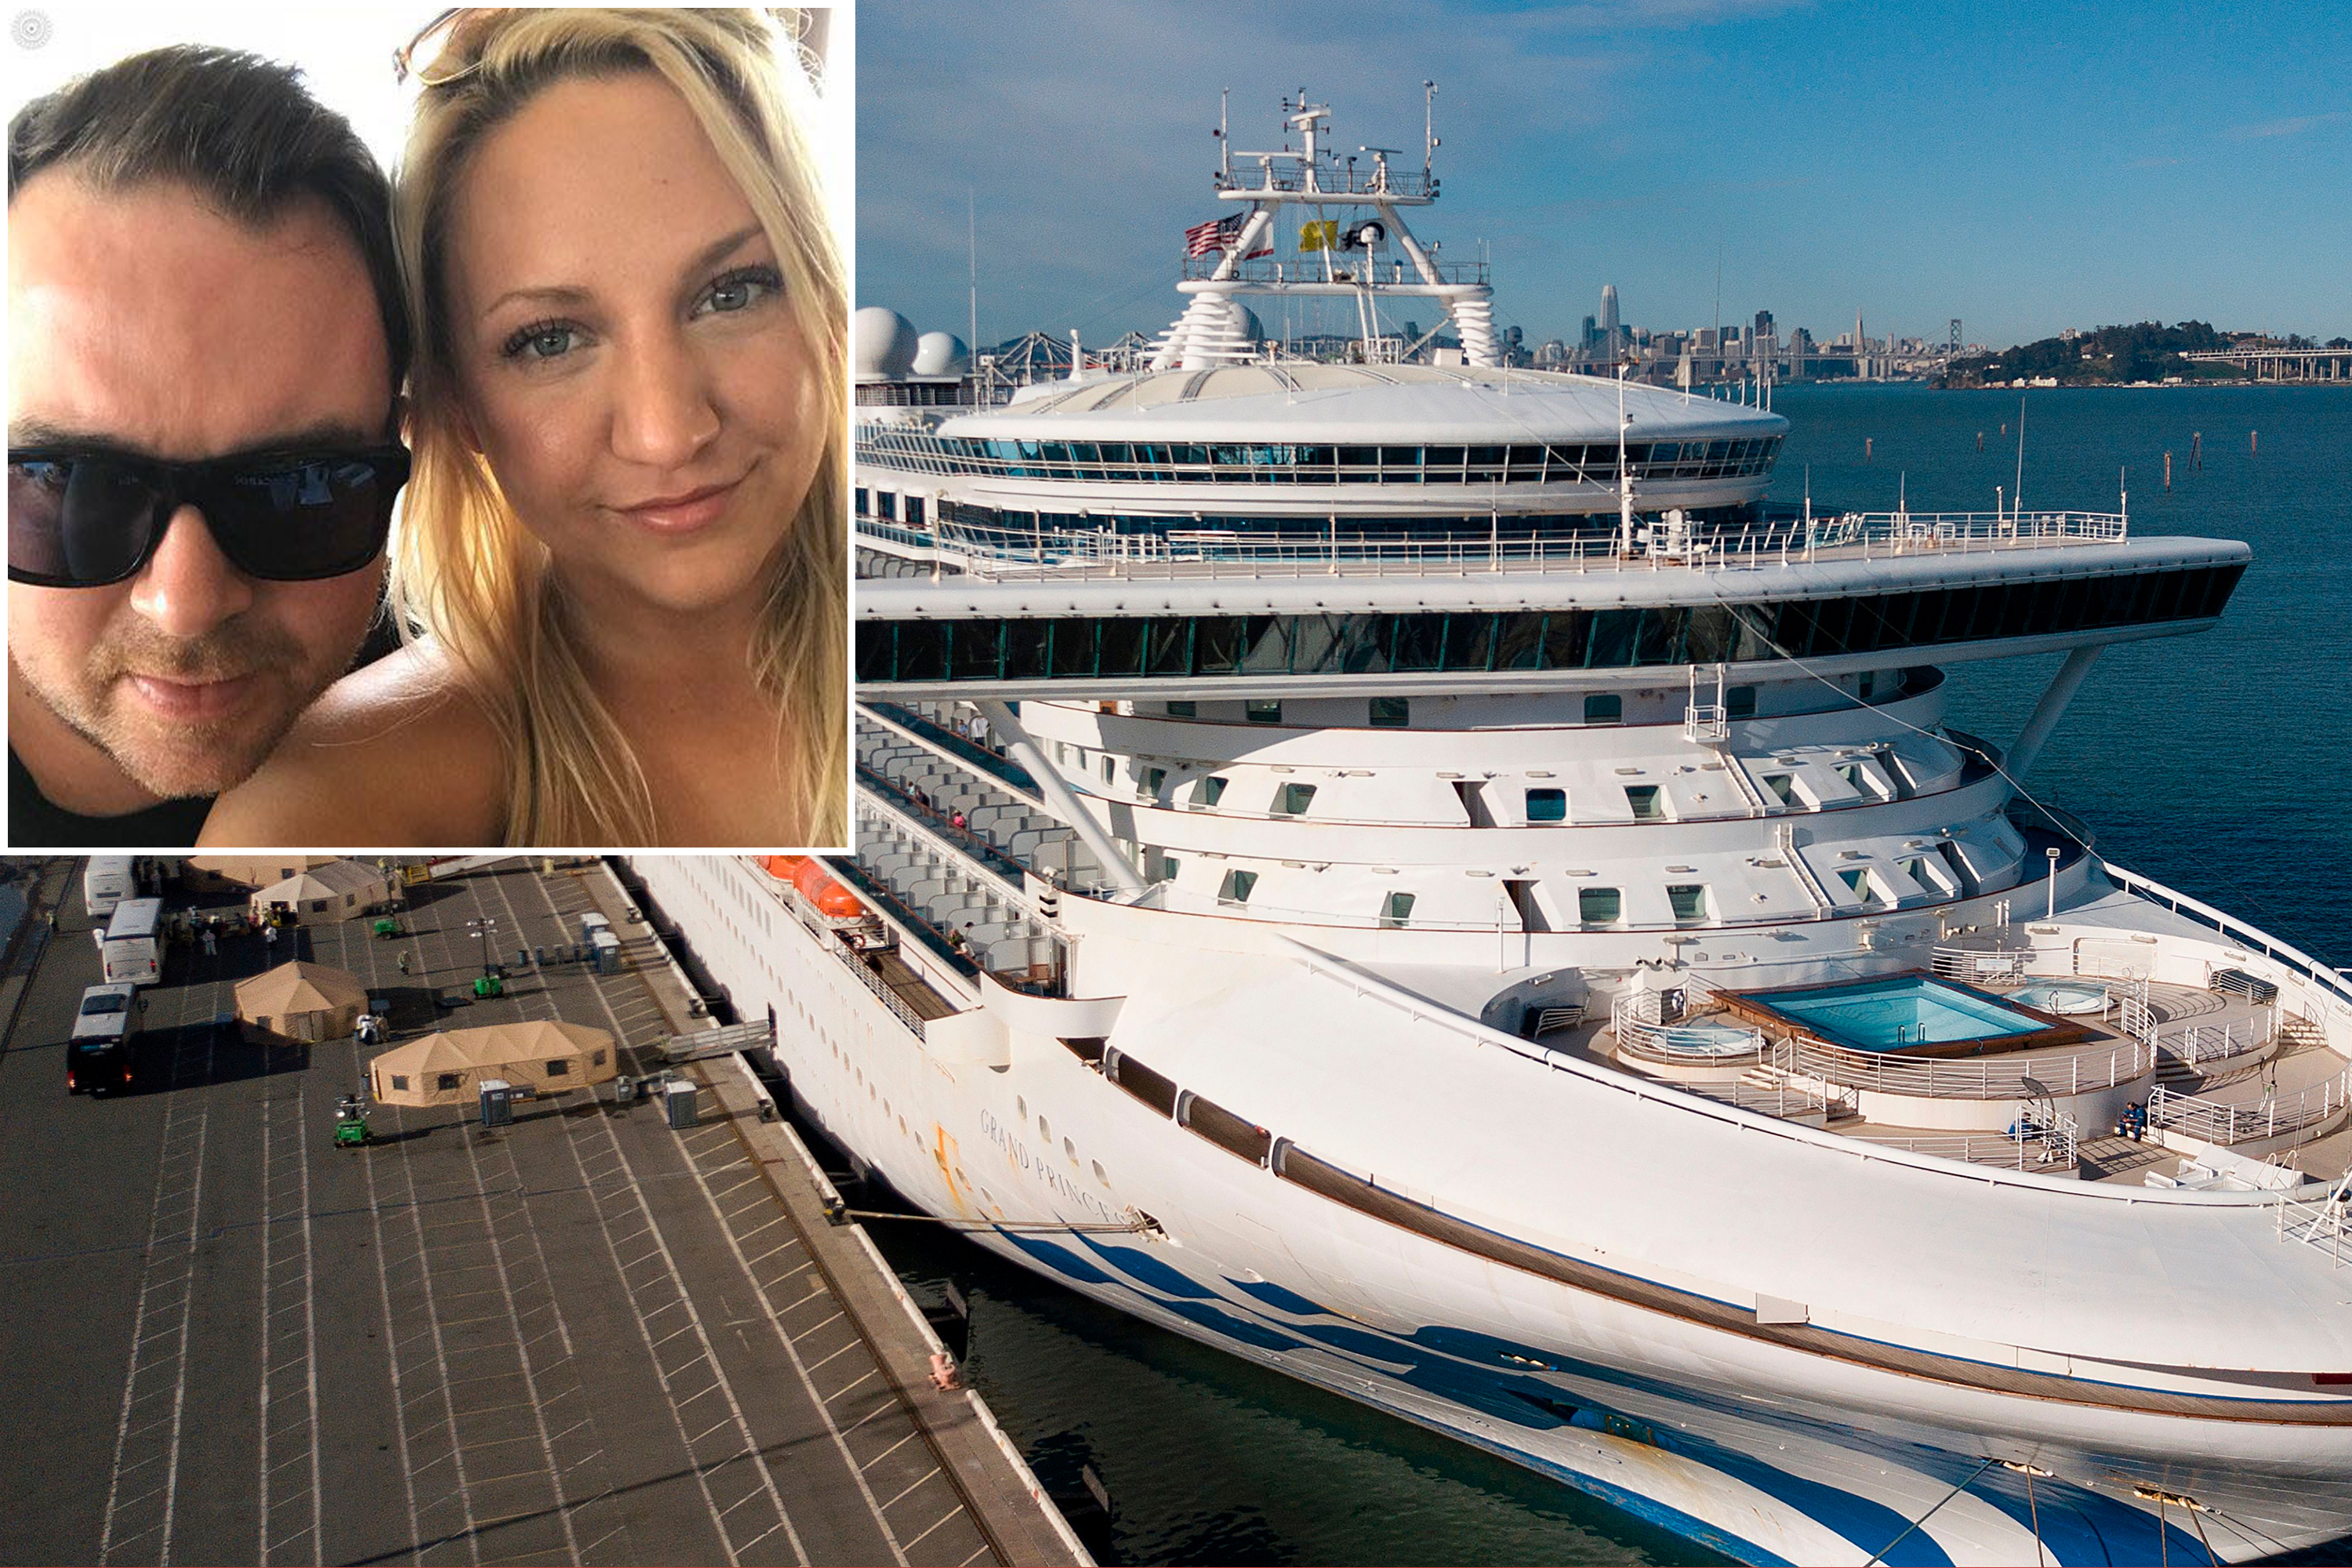 bobbie herrera recommends cruise ship sex photos pic